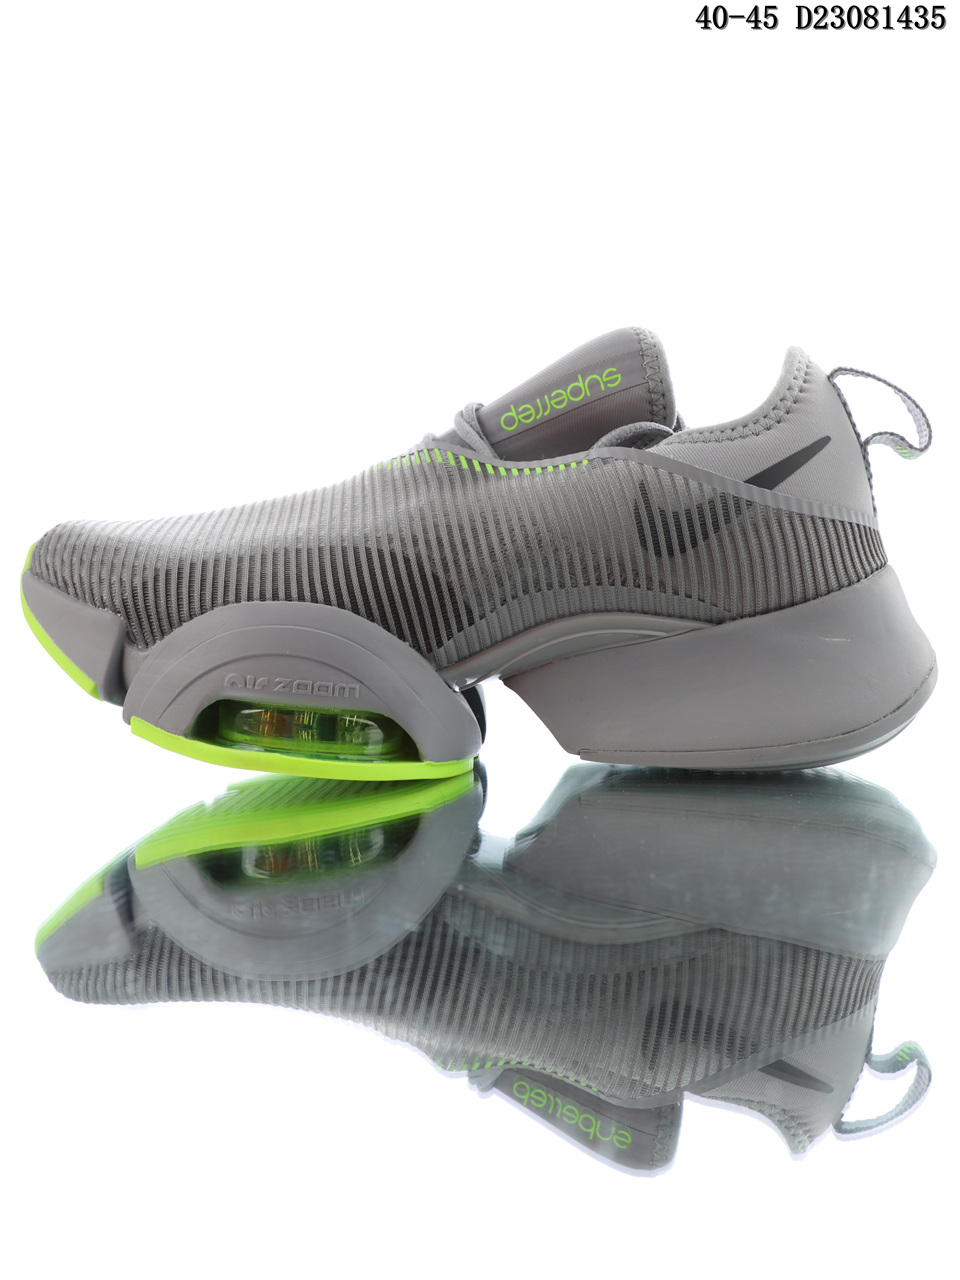 Nike Air Zoom Superrep gray-green 